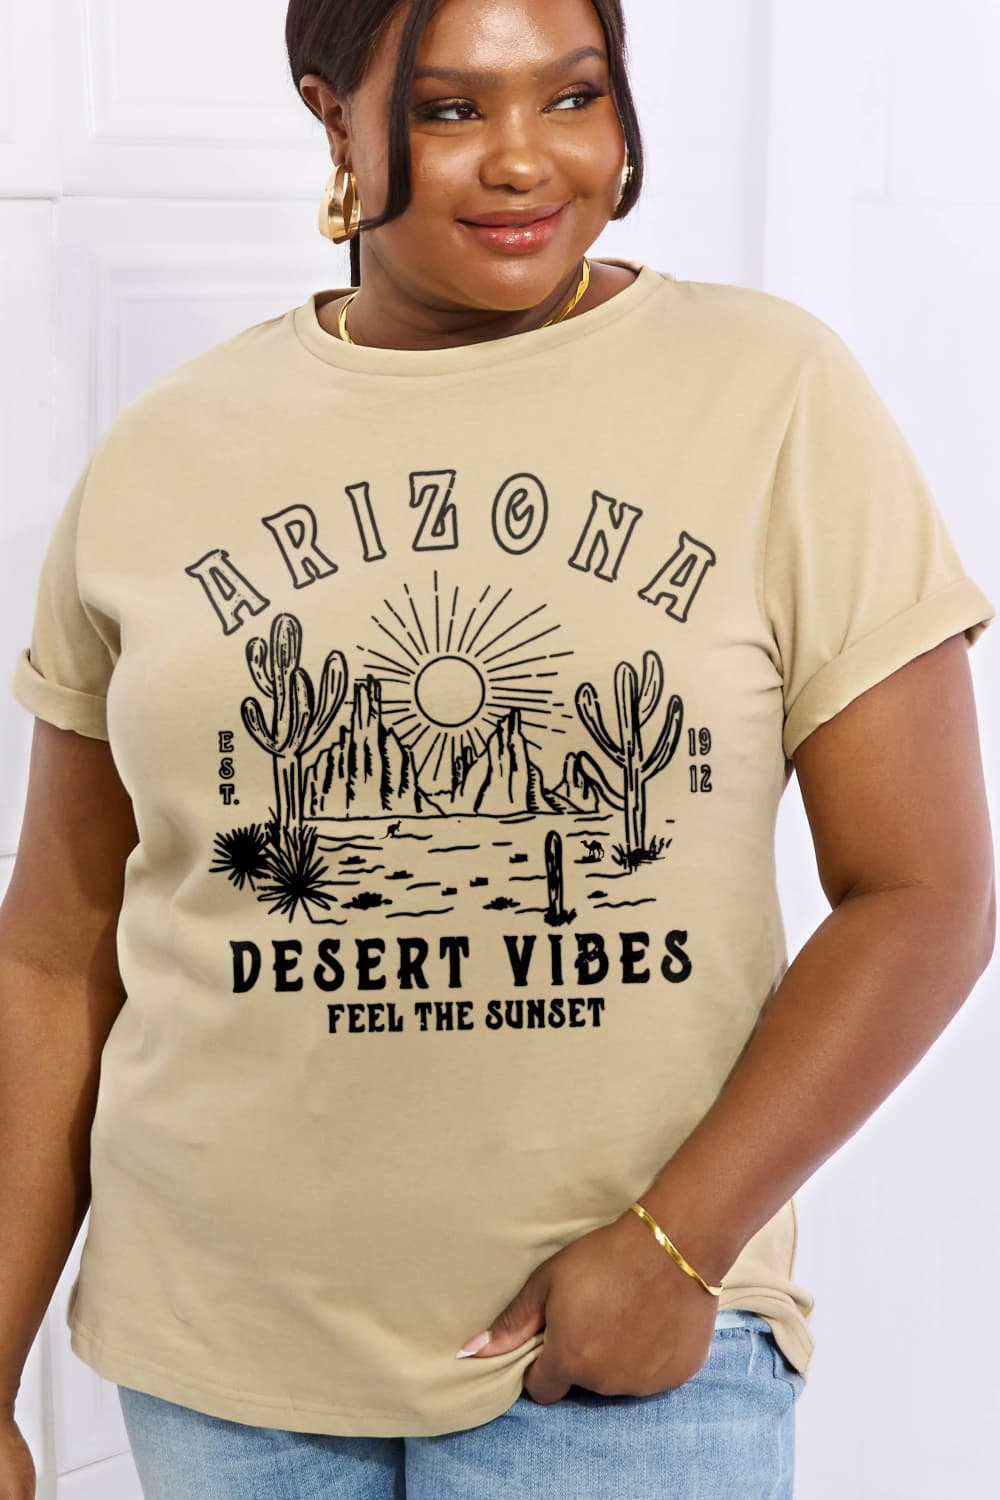 ARIZONA DESERT VIBES FEEL THE SUNSET Graphic Cotton Tee